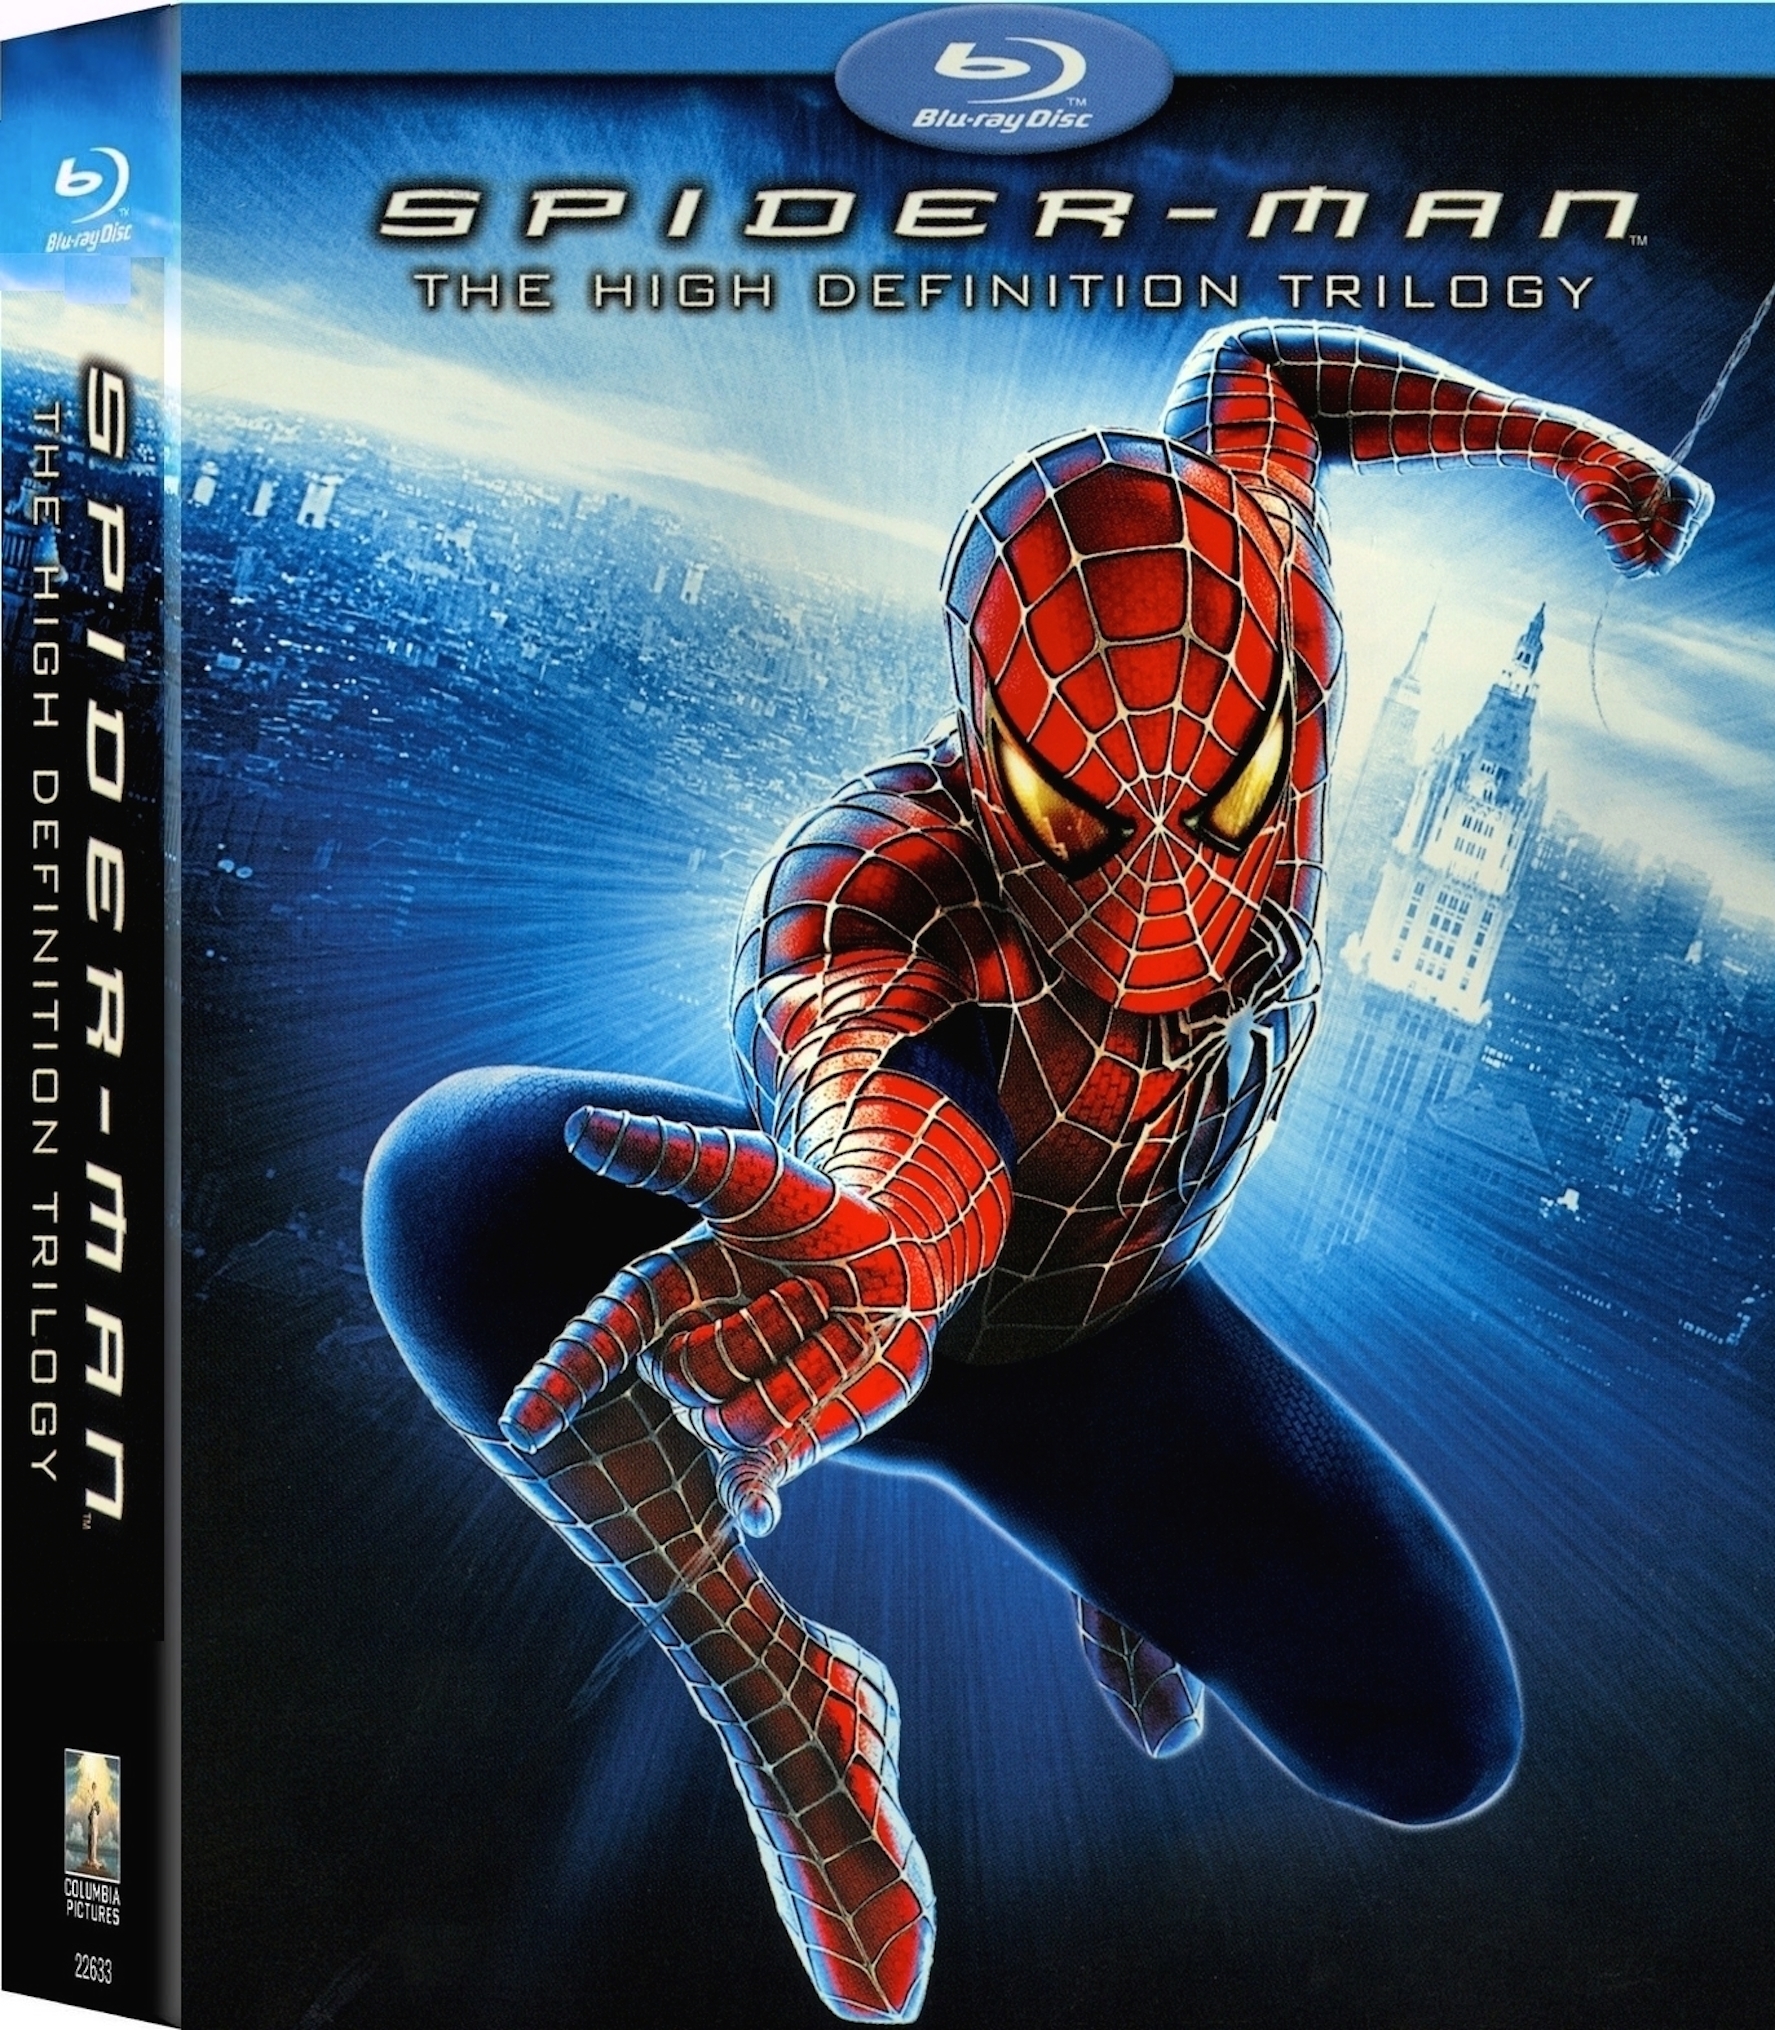 [蜘蛛侠1].Spider-Man.I.2002.CHN.BluRay.1080p.AVC.DTS-HD.MA.5.1-HDBiger   42.31G( ]+ g* K. k$ h6 ?-1.jpg